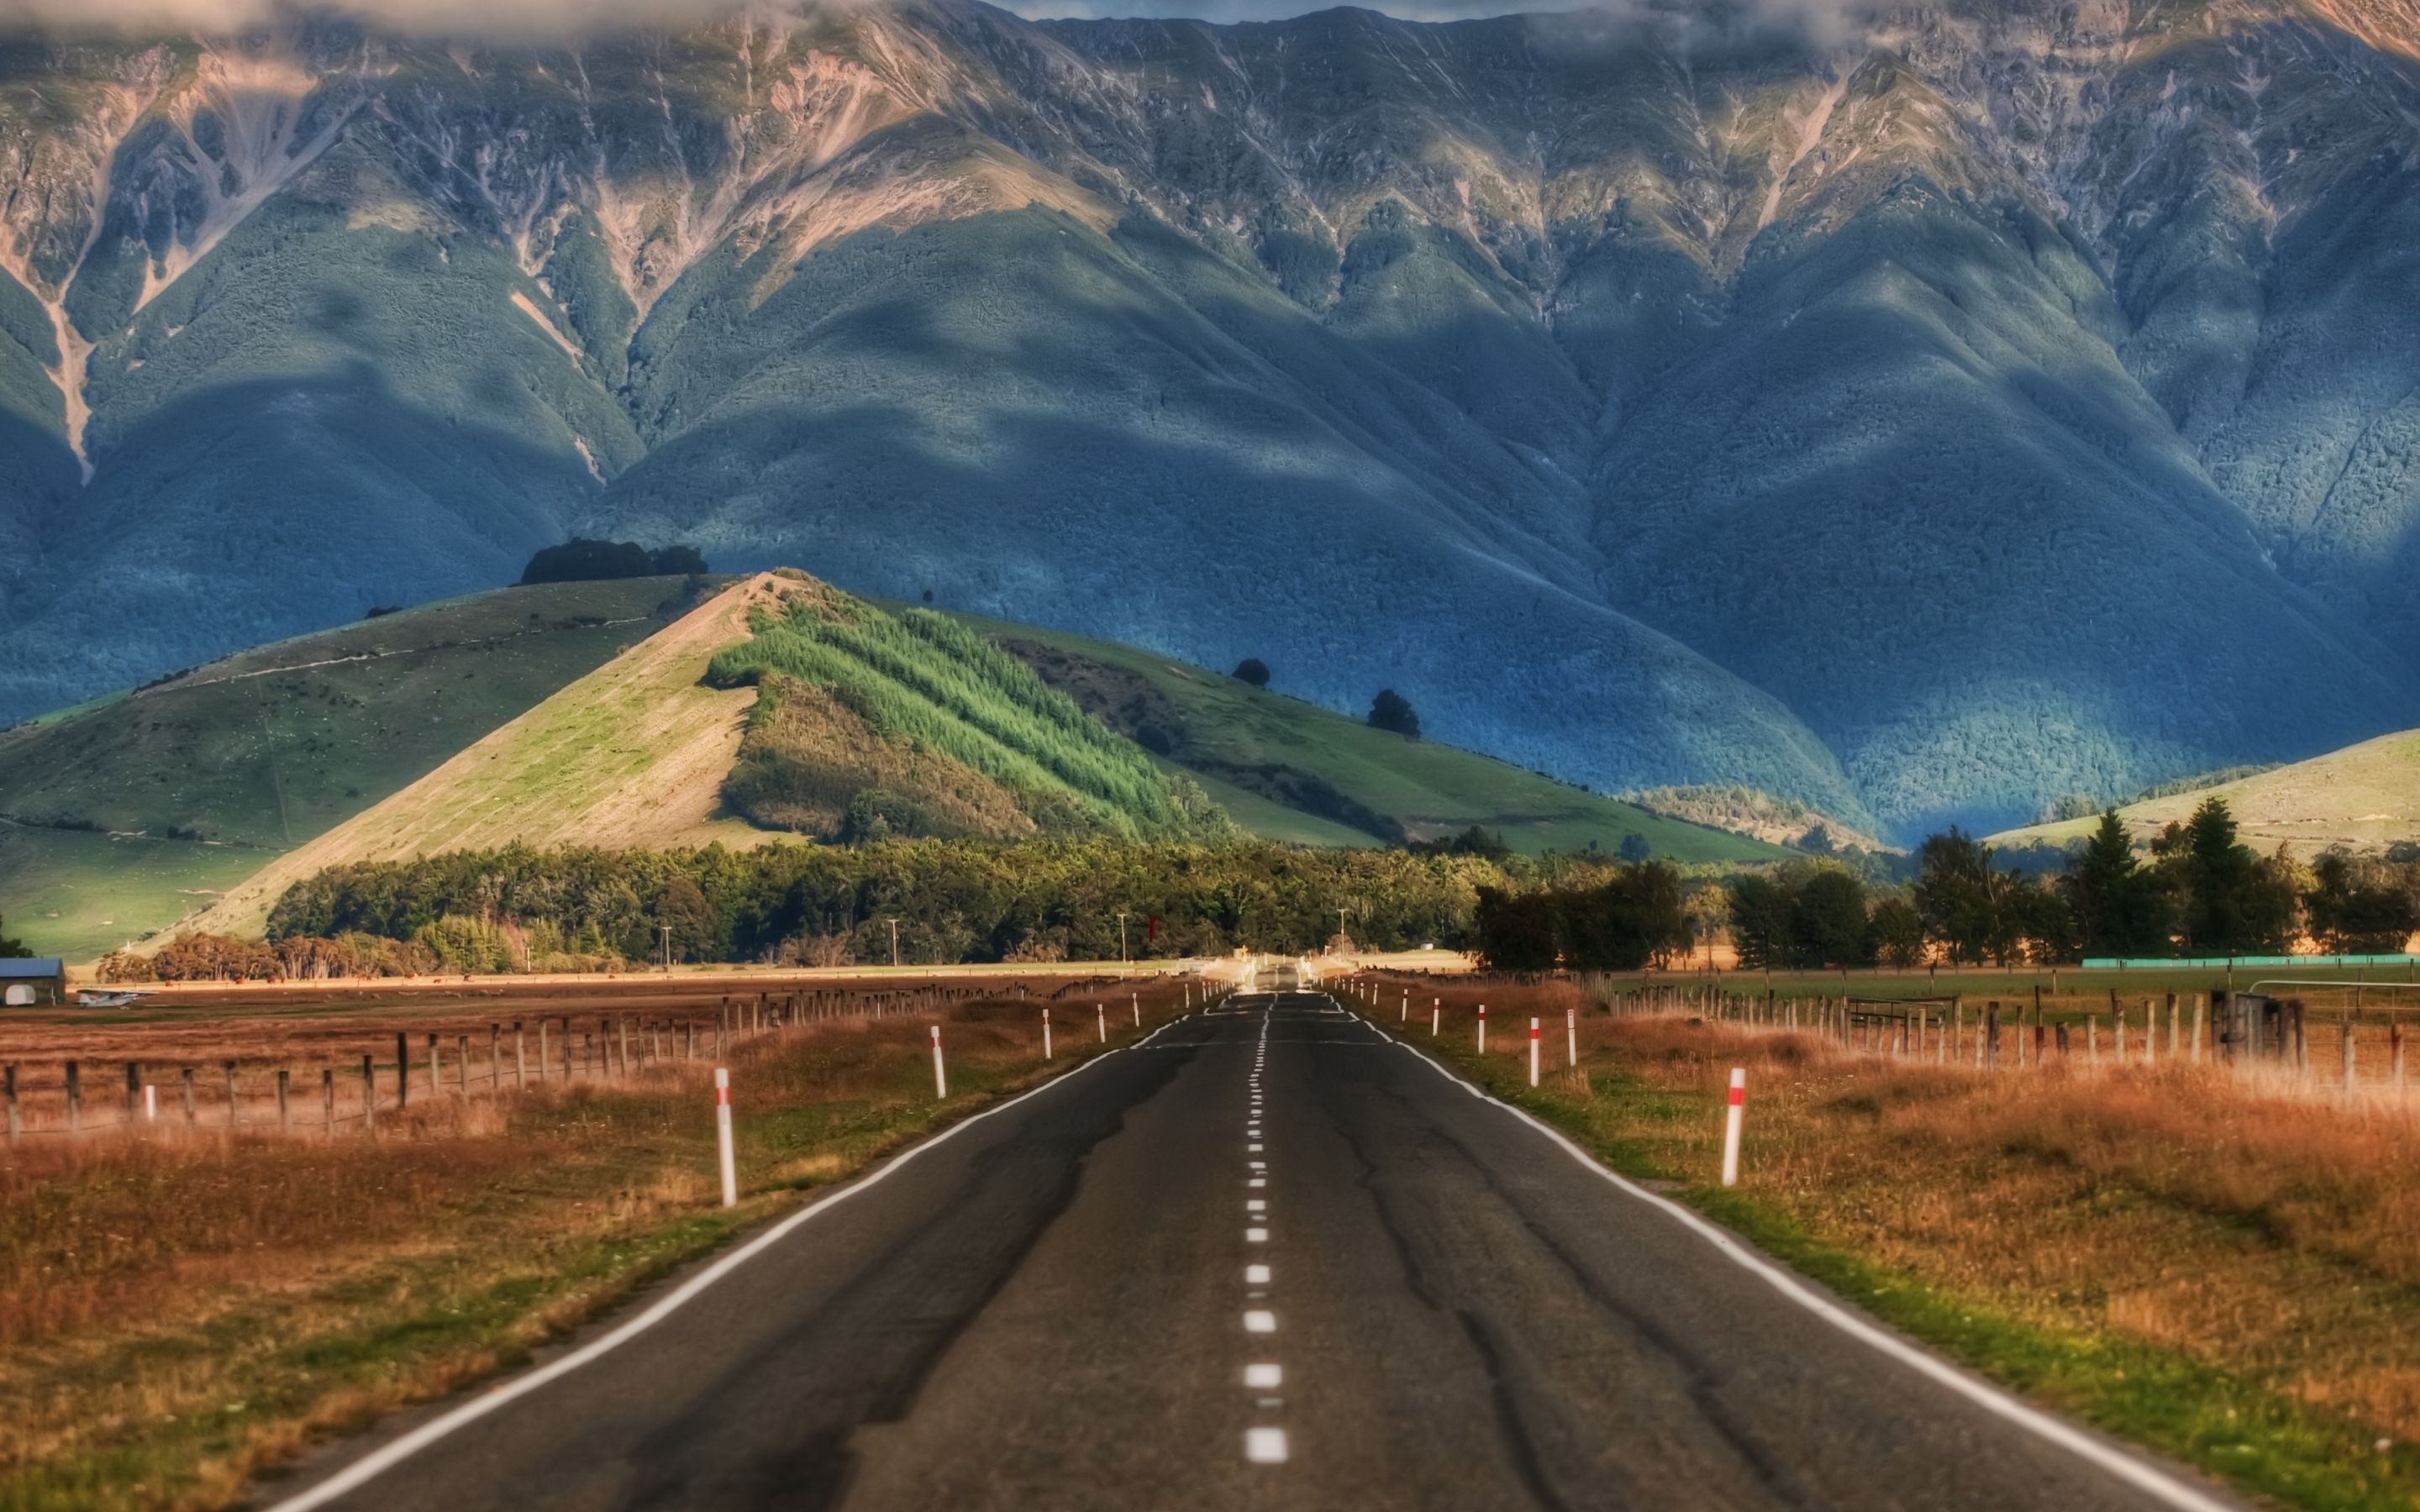 Road In New Zealand Mac Wallpaper Download | Free Mac Wallpapers ...